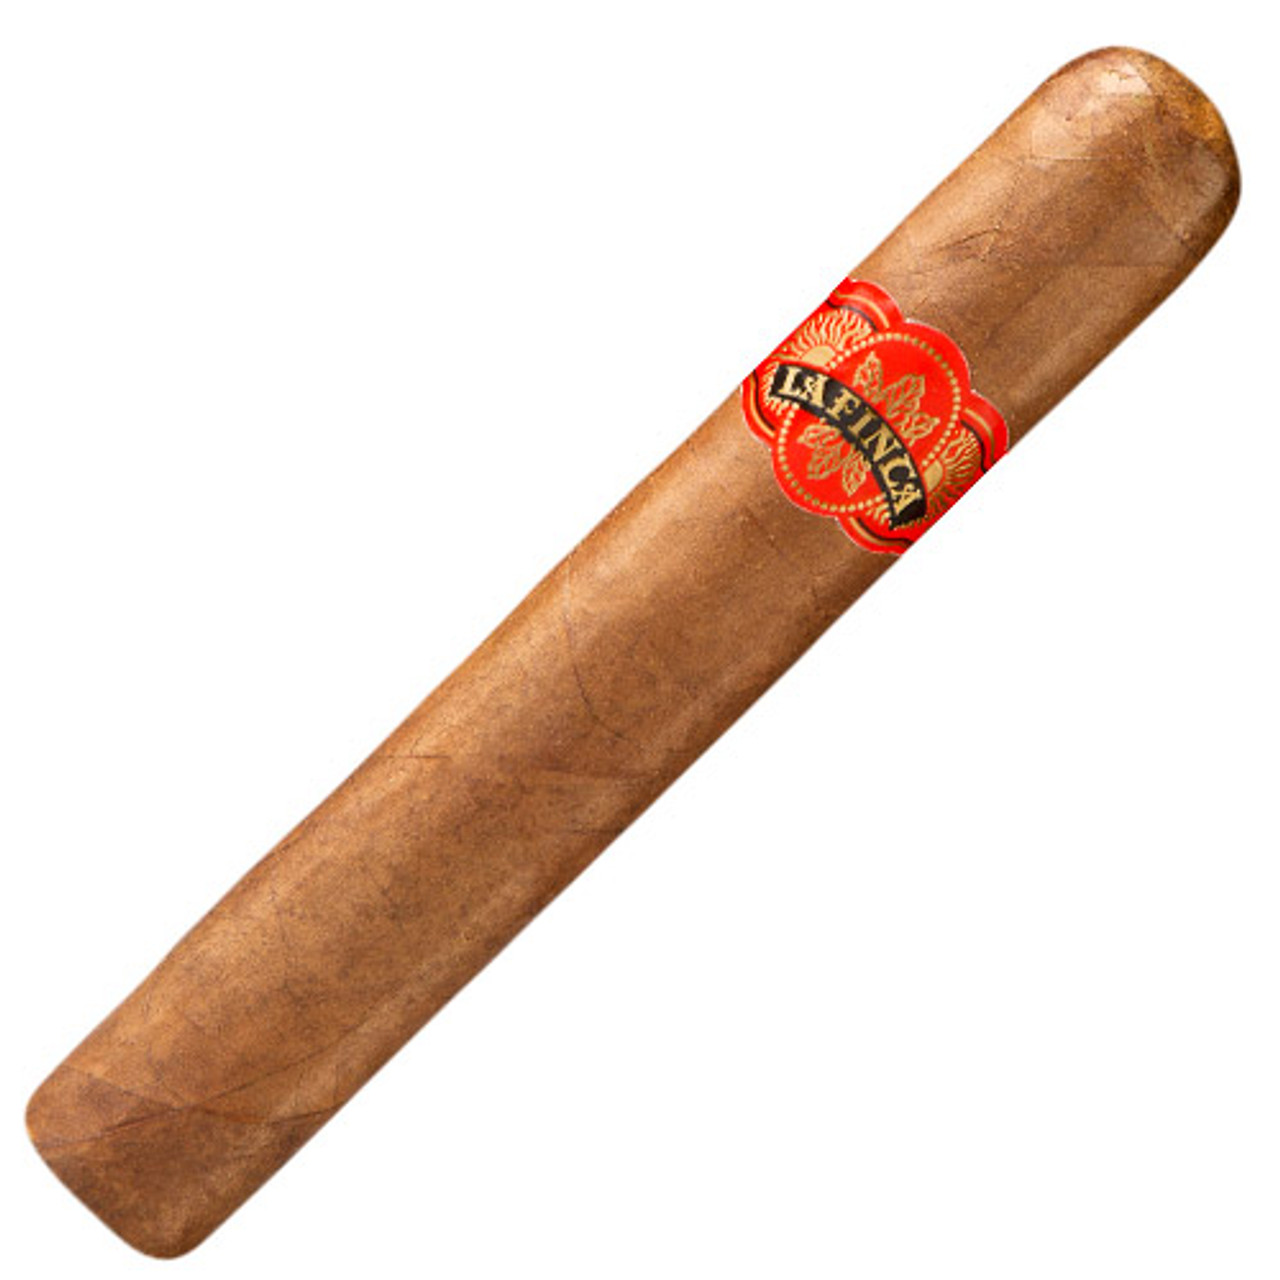 La Finca 6 x 60 Bundle Cigars - 6 x 60 Single